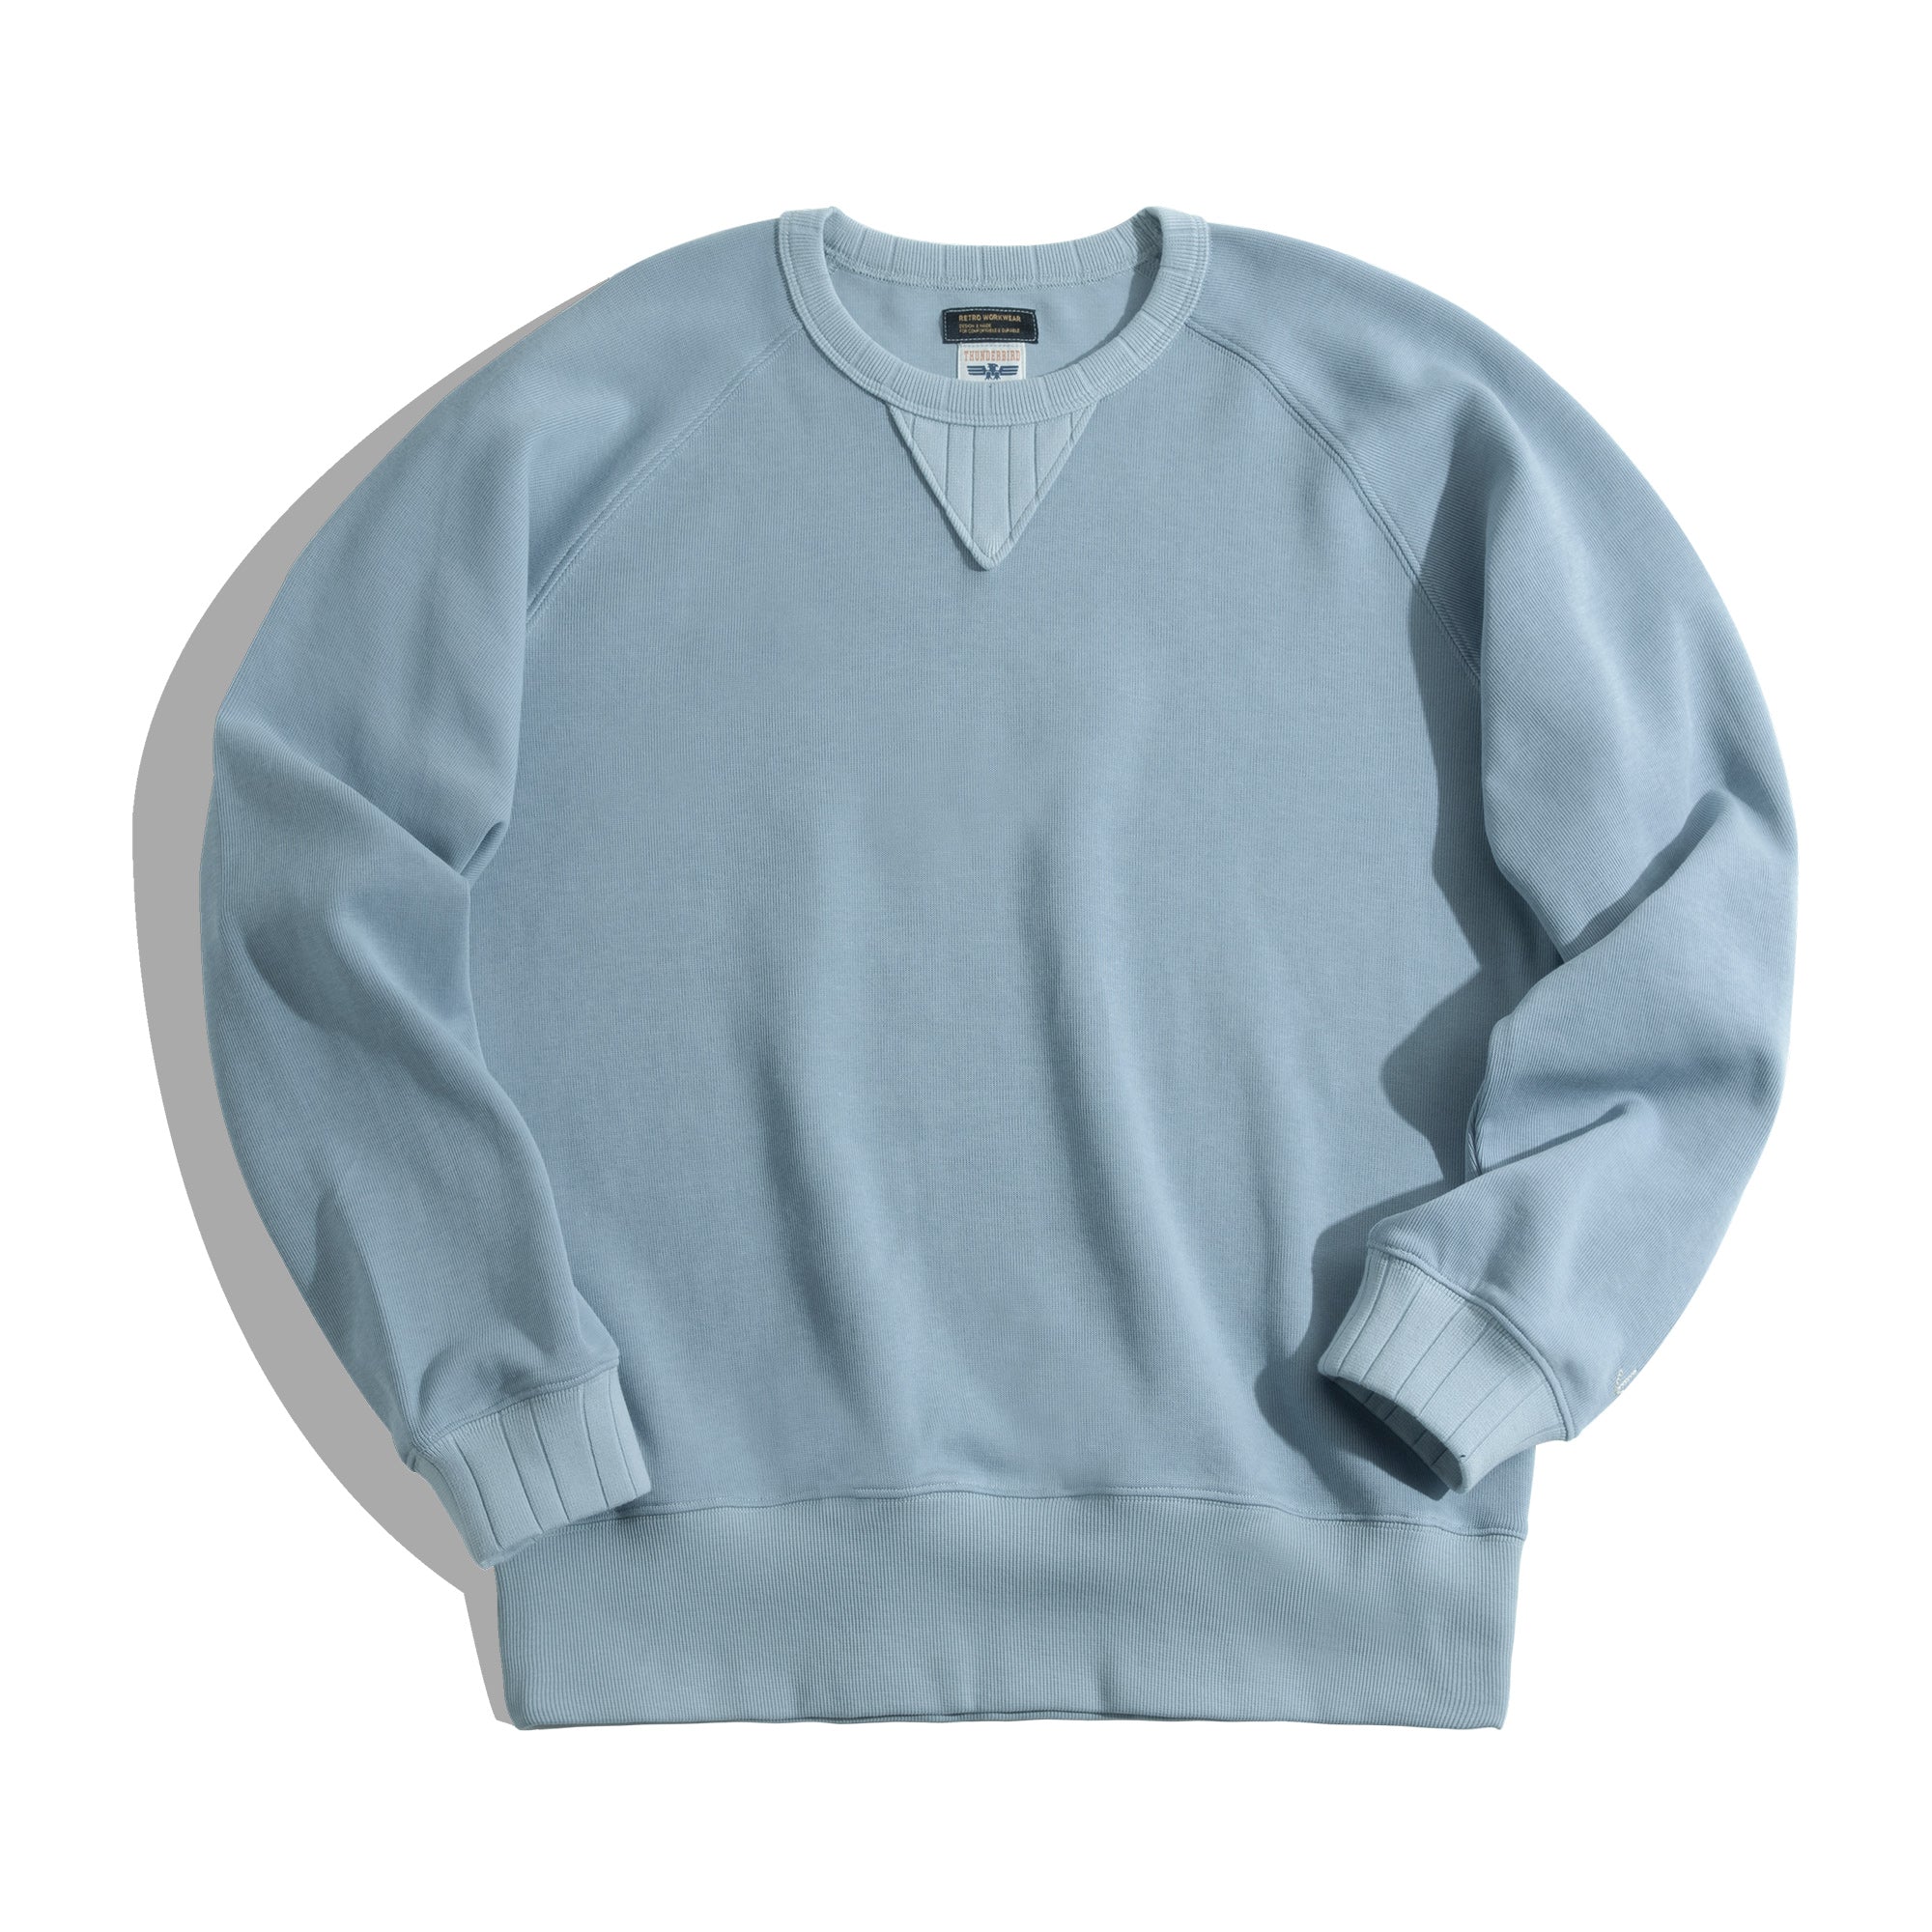 Men's Vintage Khaki Sweater Jacket for Autumn Madden Tooling